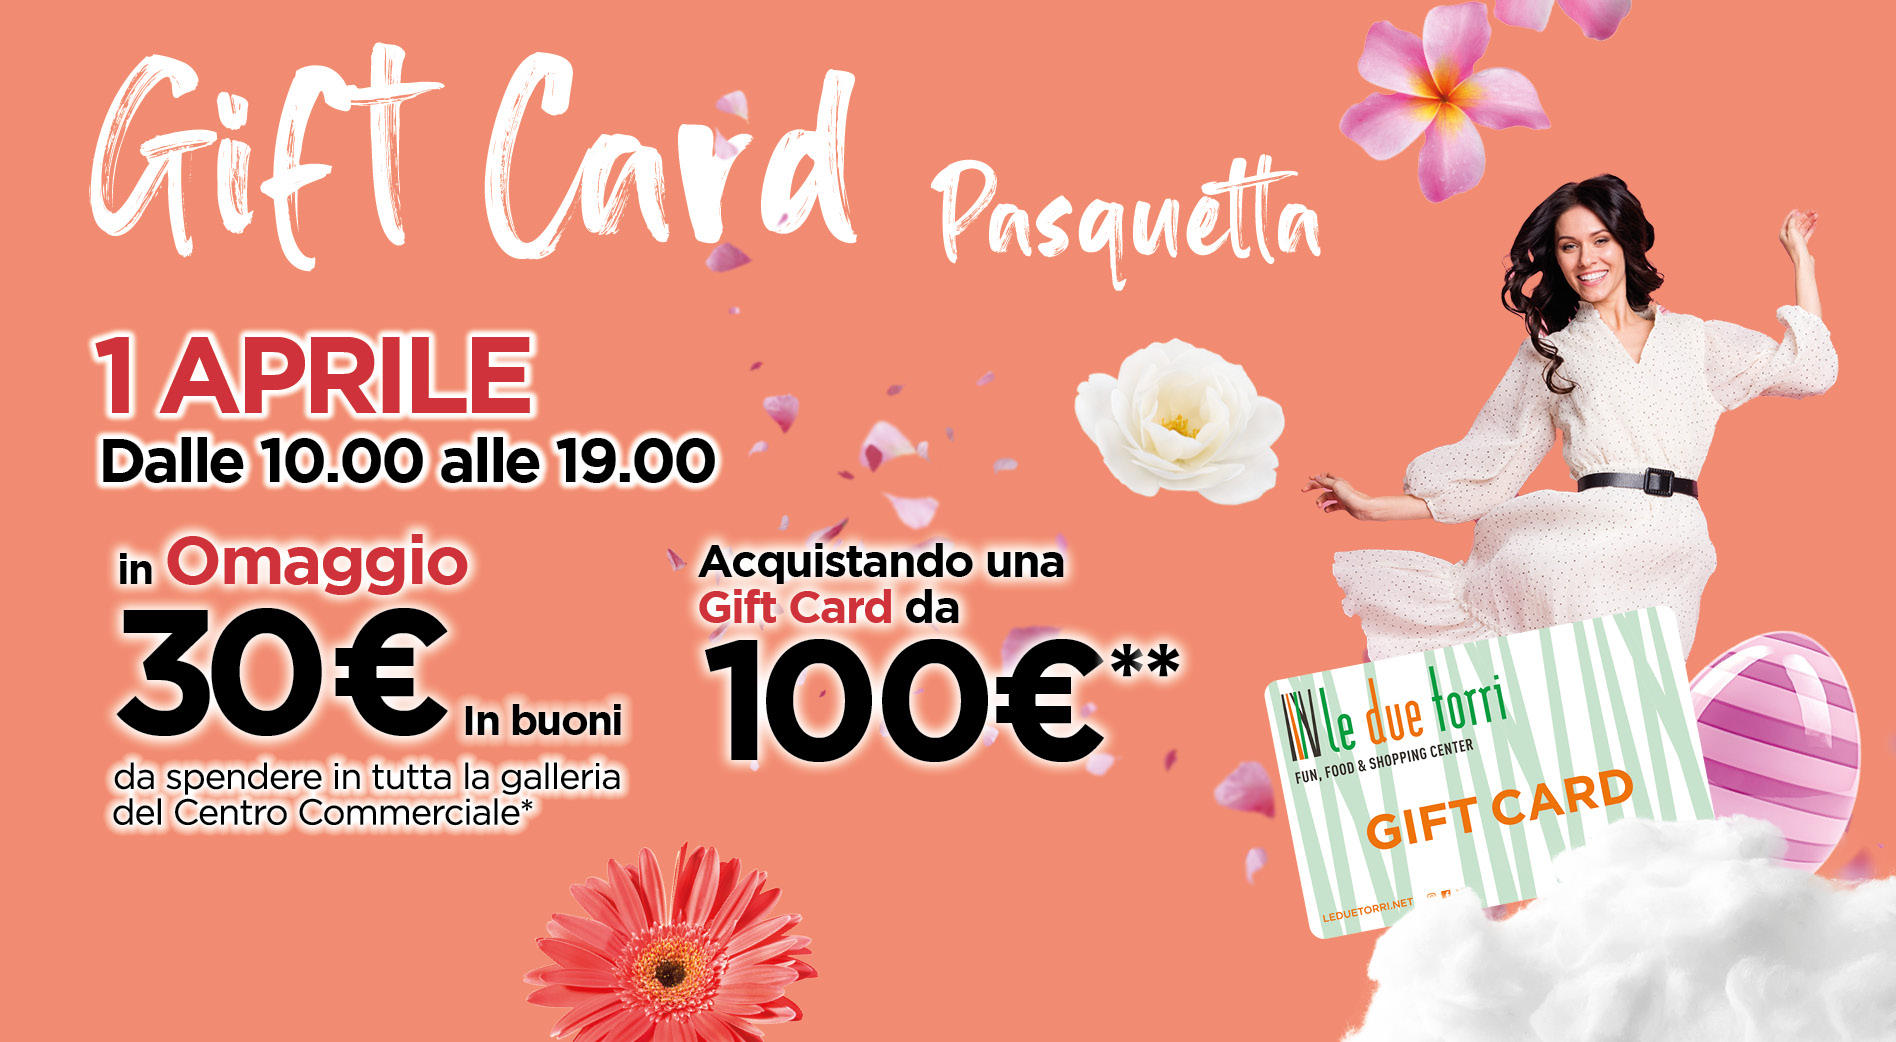 Gift Card - Pasquetta